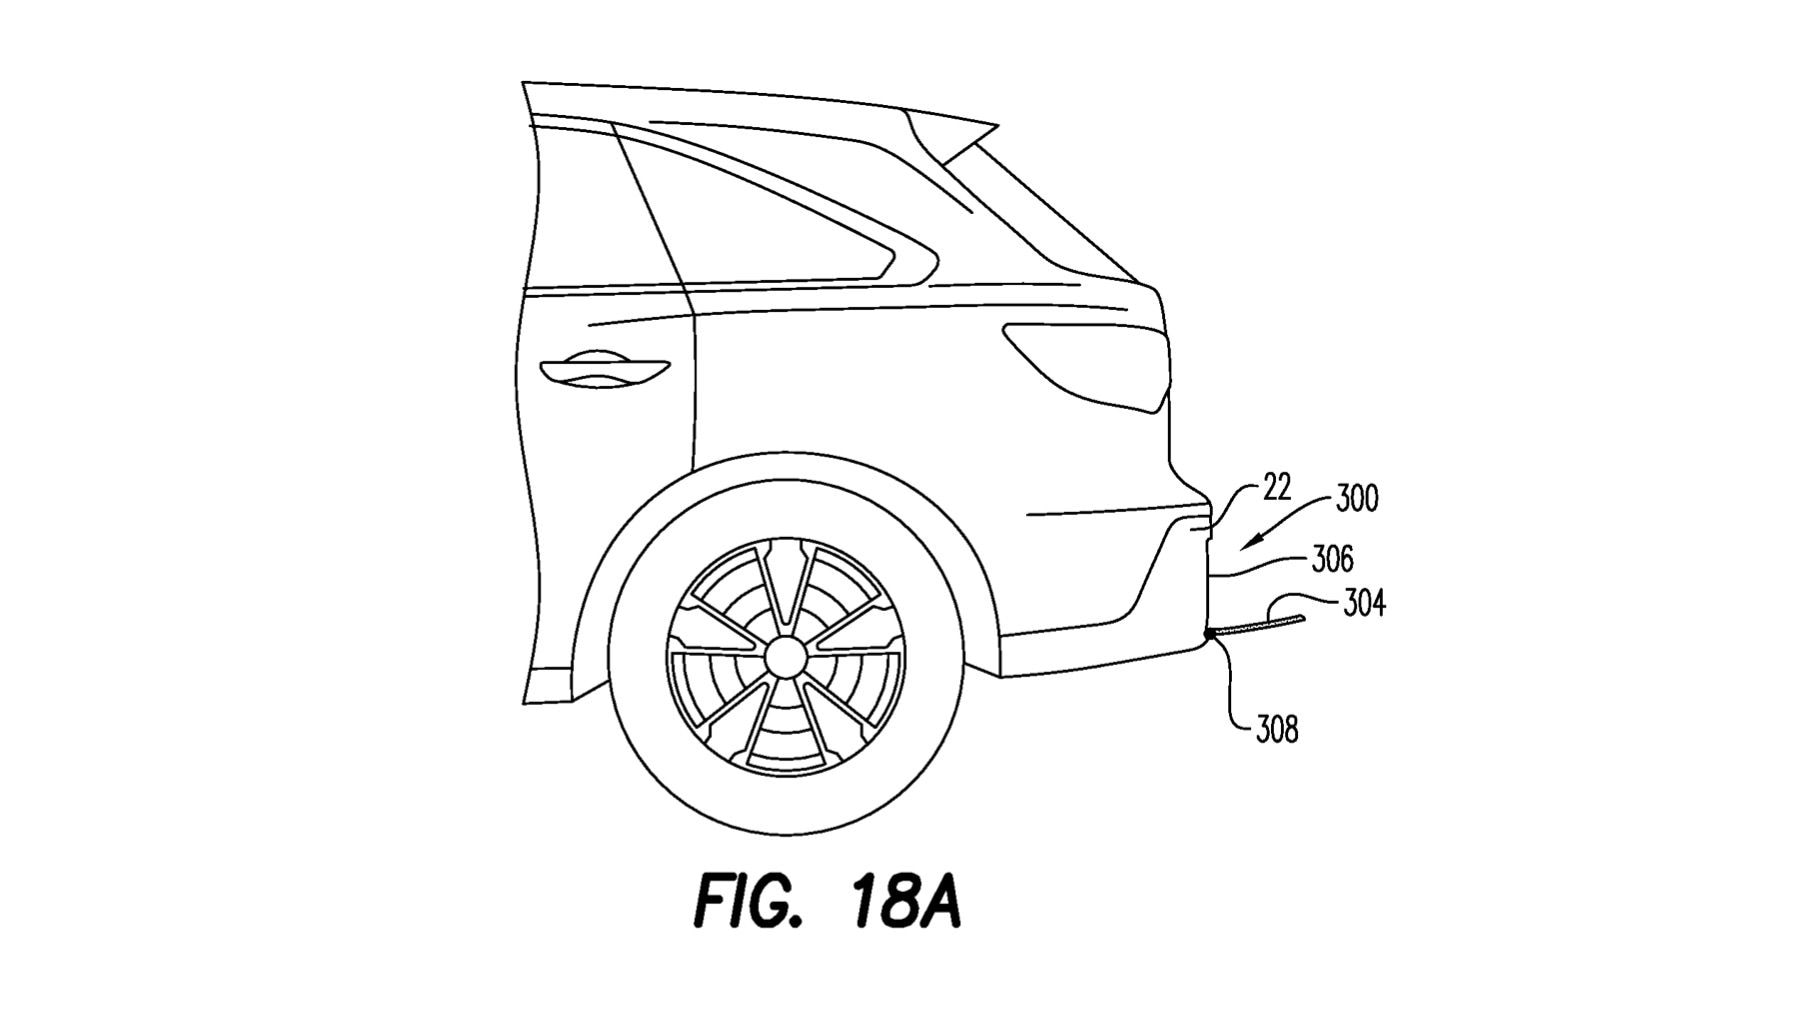 Honda active rear diffuser patent image